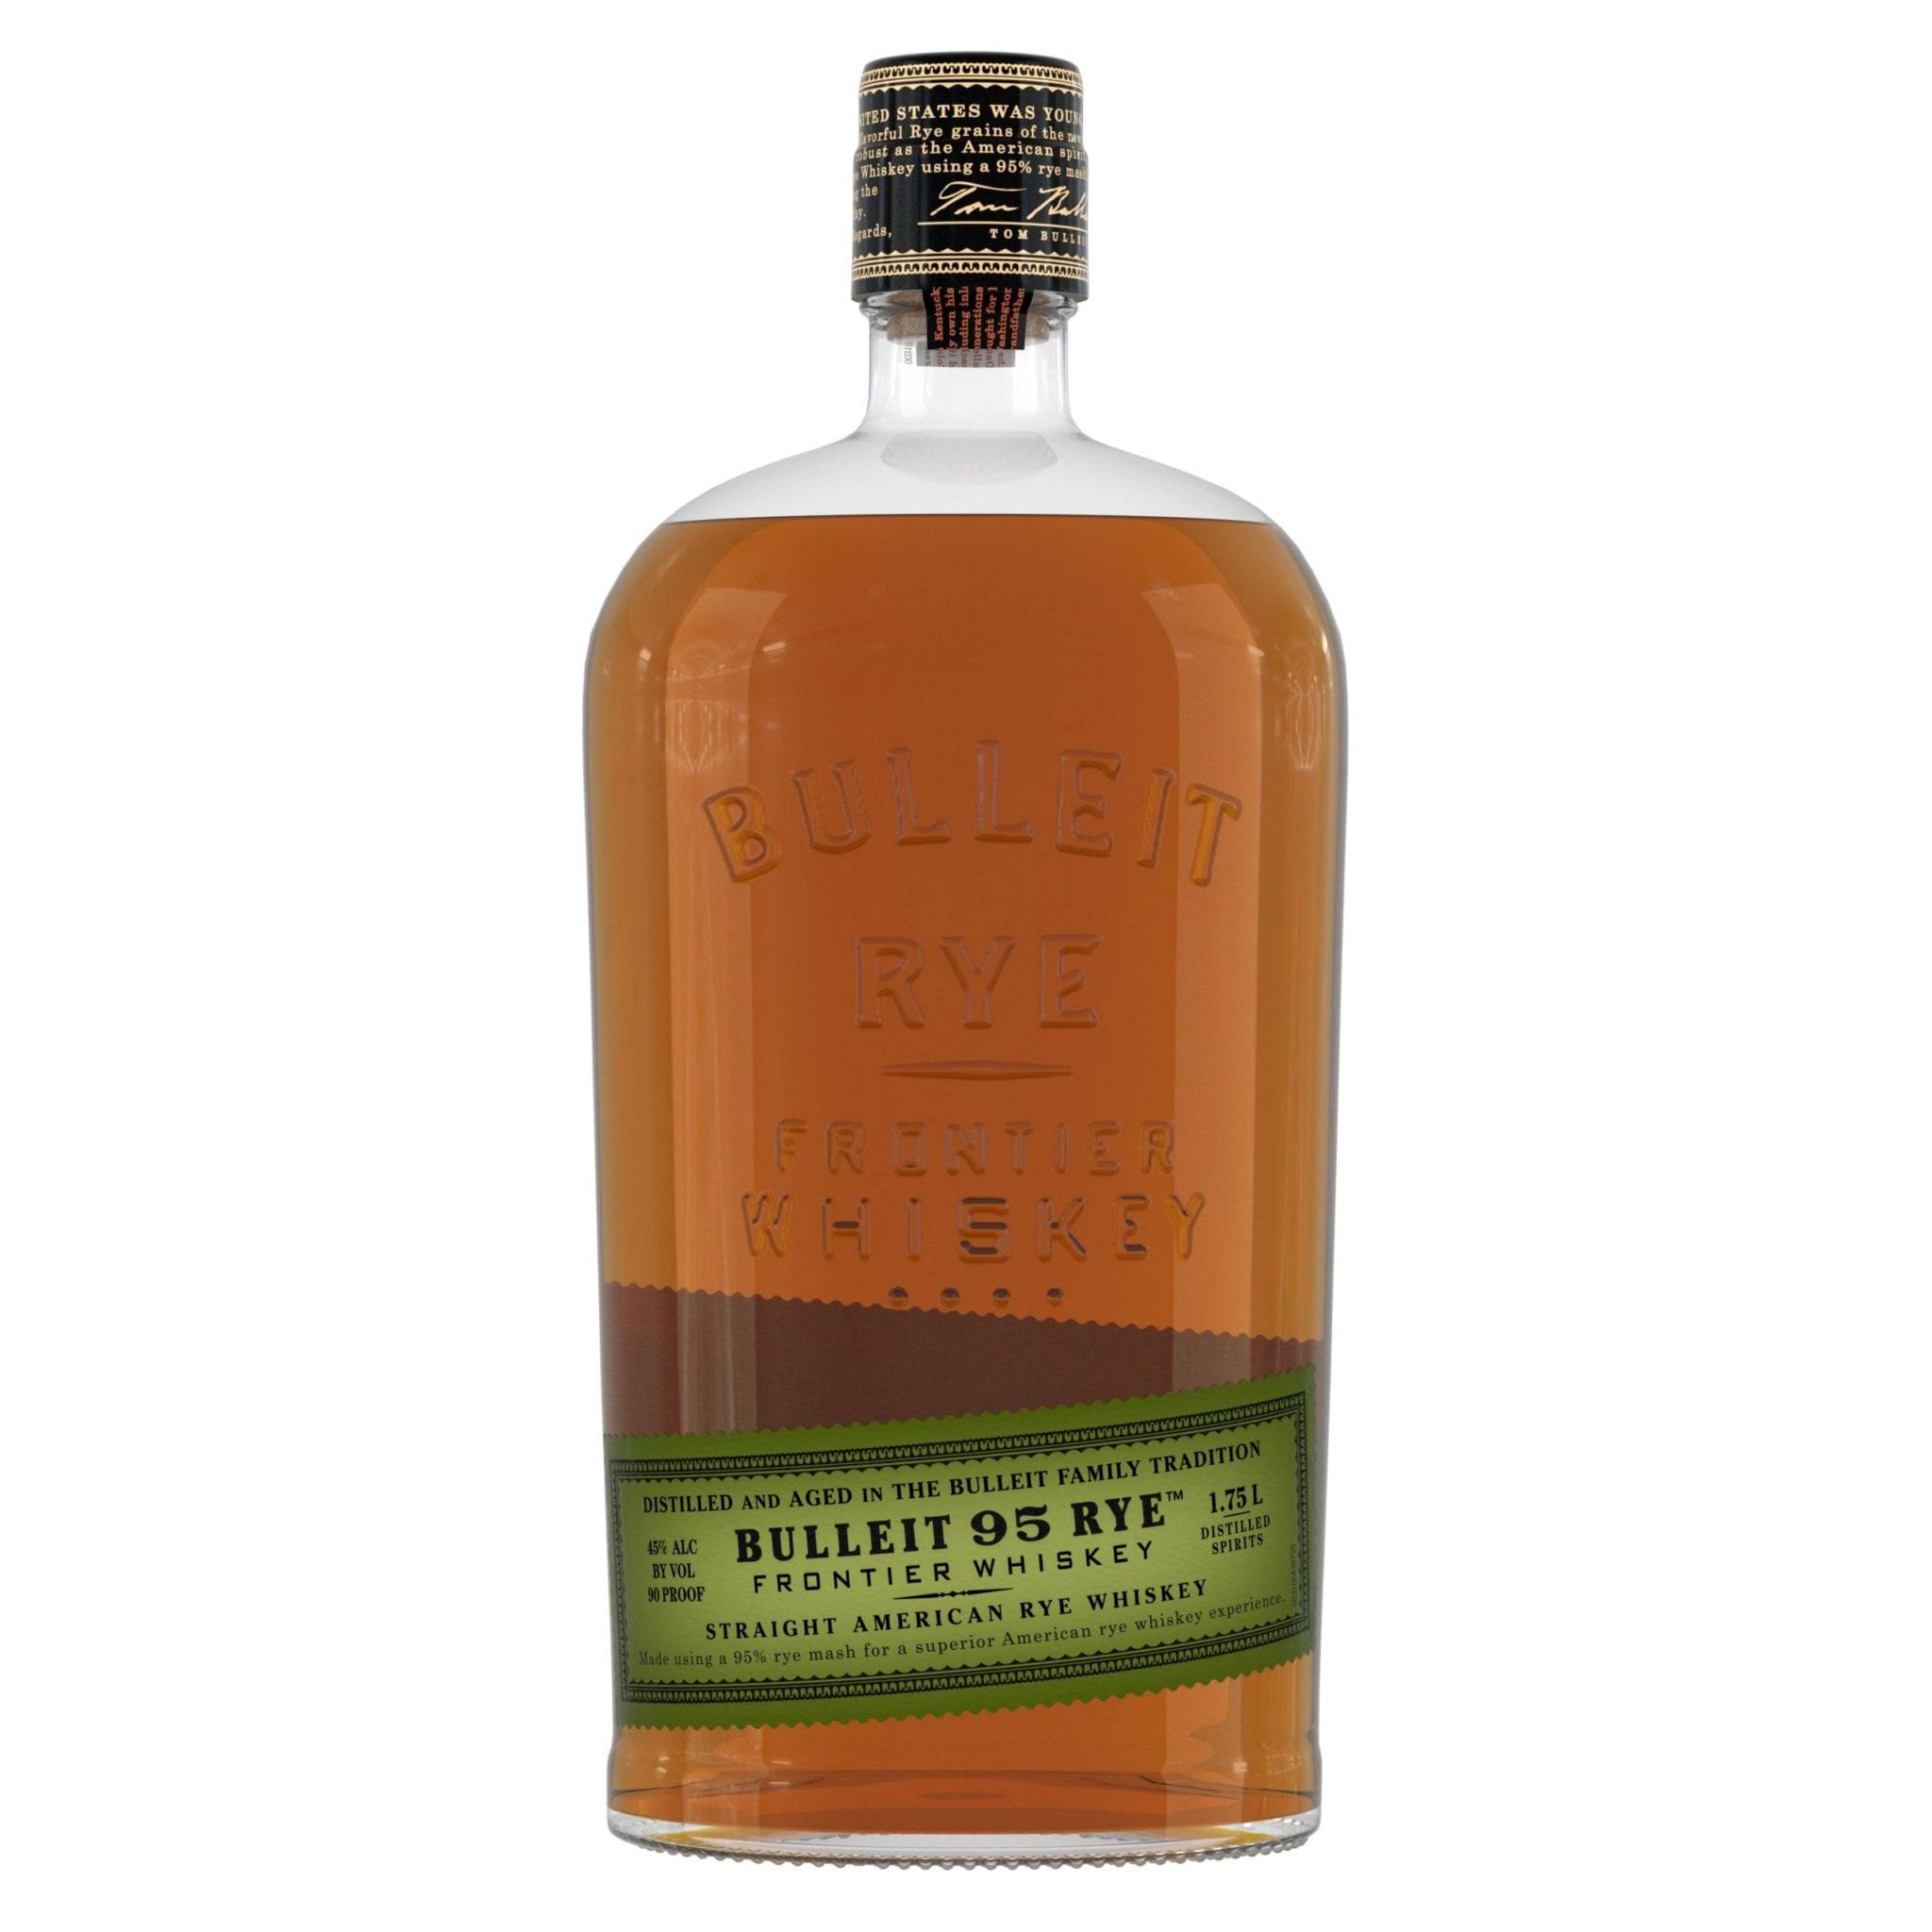 Bulleit Rye Frontier Whiskey - 1.75 L bottle